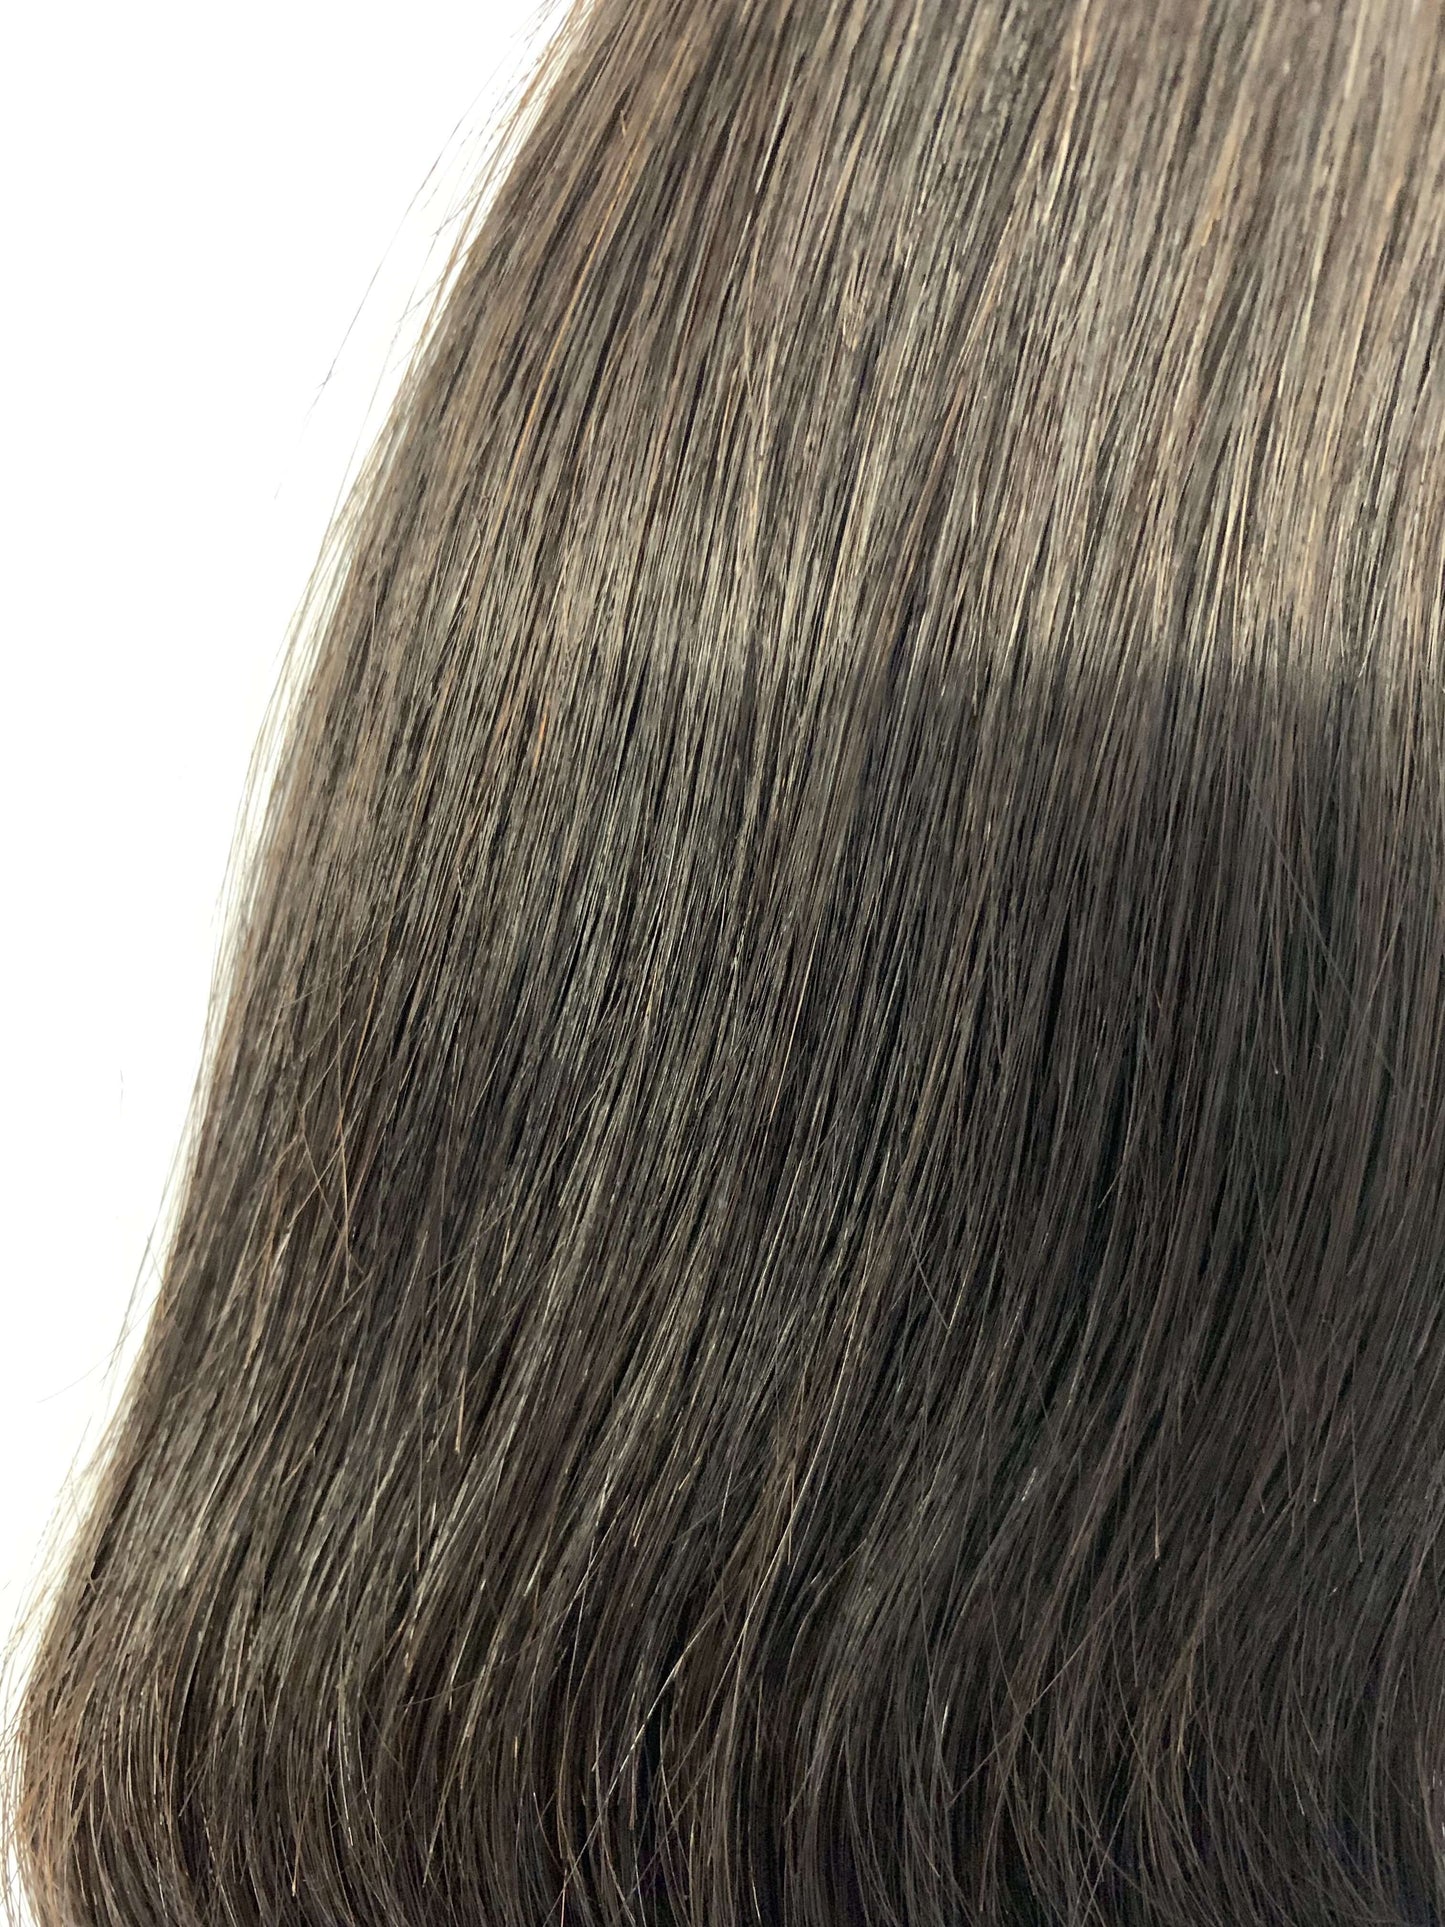 Brazilian Virgin Remy Human Hair - Wefts, 18'',Straight, Virgin,100g - Quick Shipping